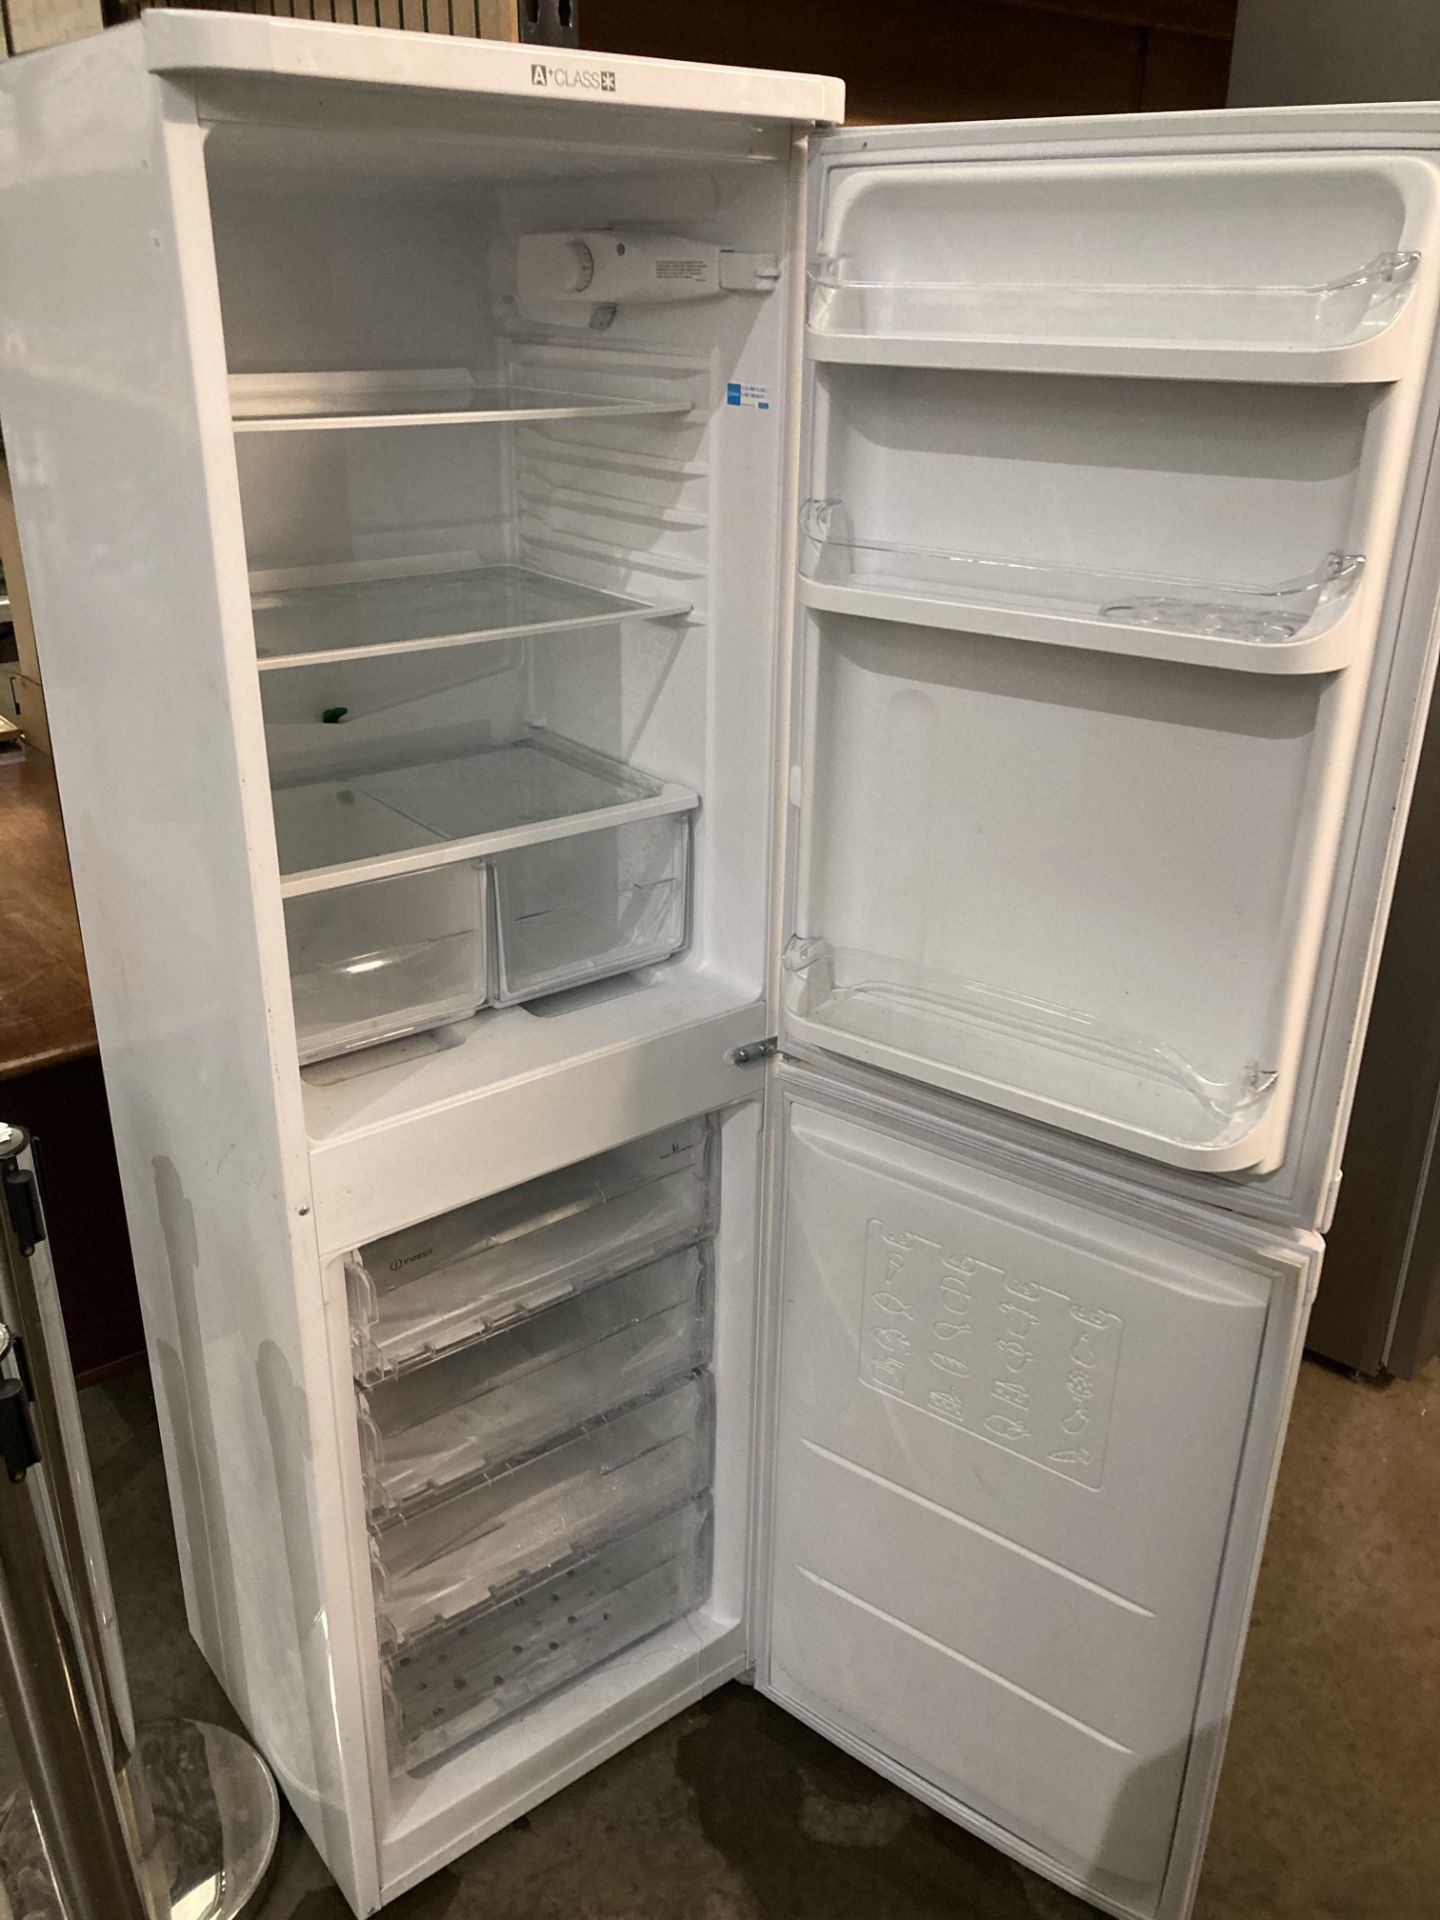 Indesit A+CLASS fridge freezer (saleroom location: PO) Further Information This item - Image 2 of 2